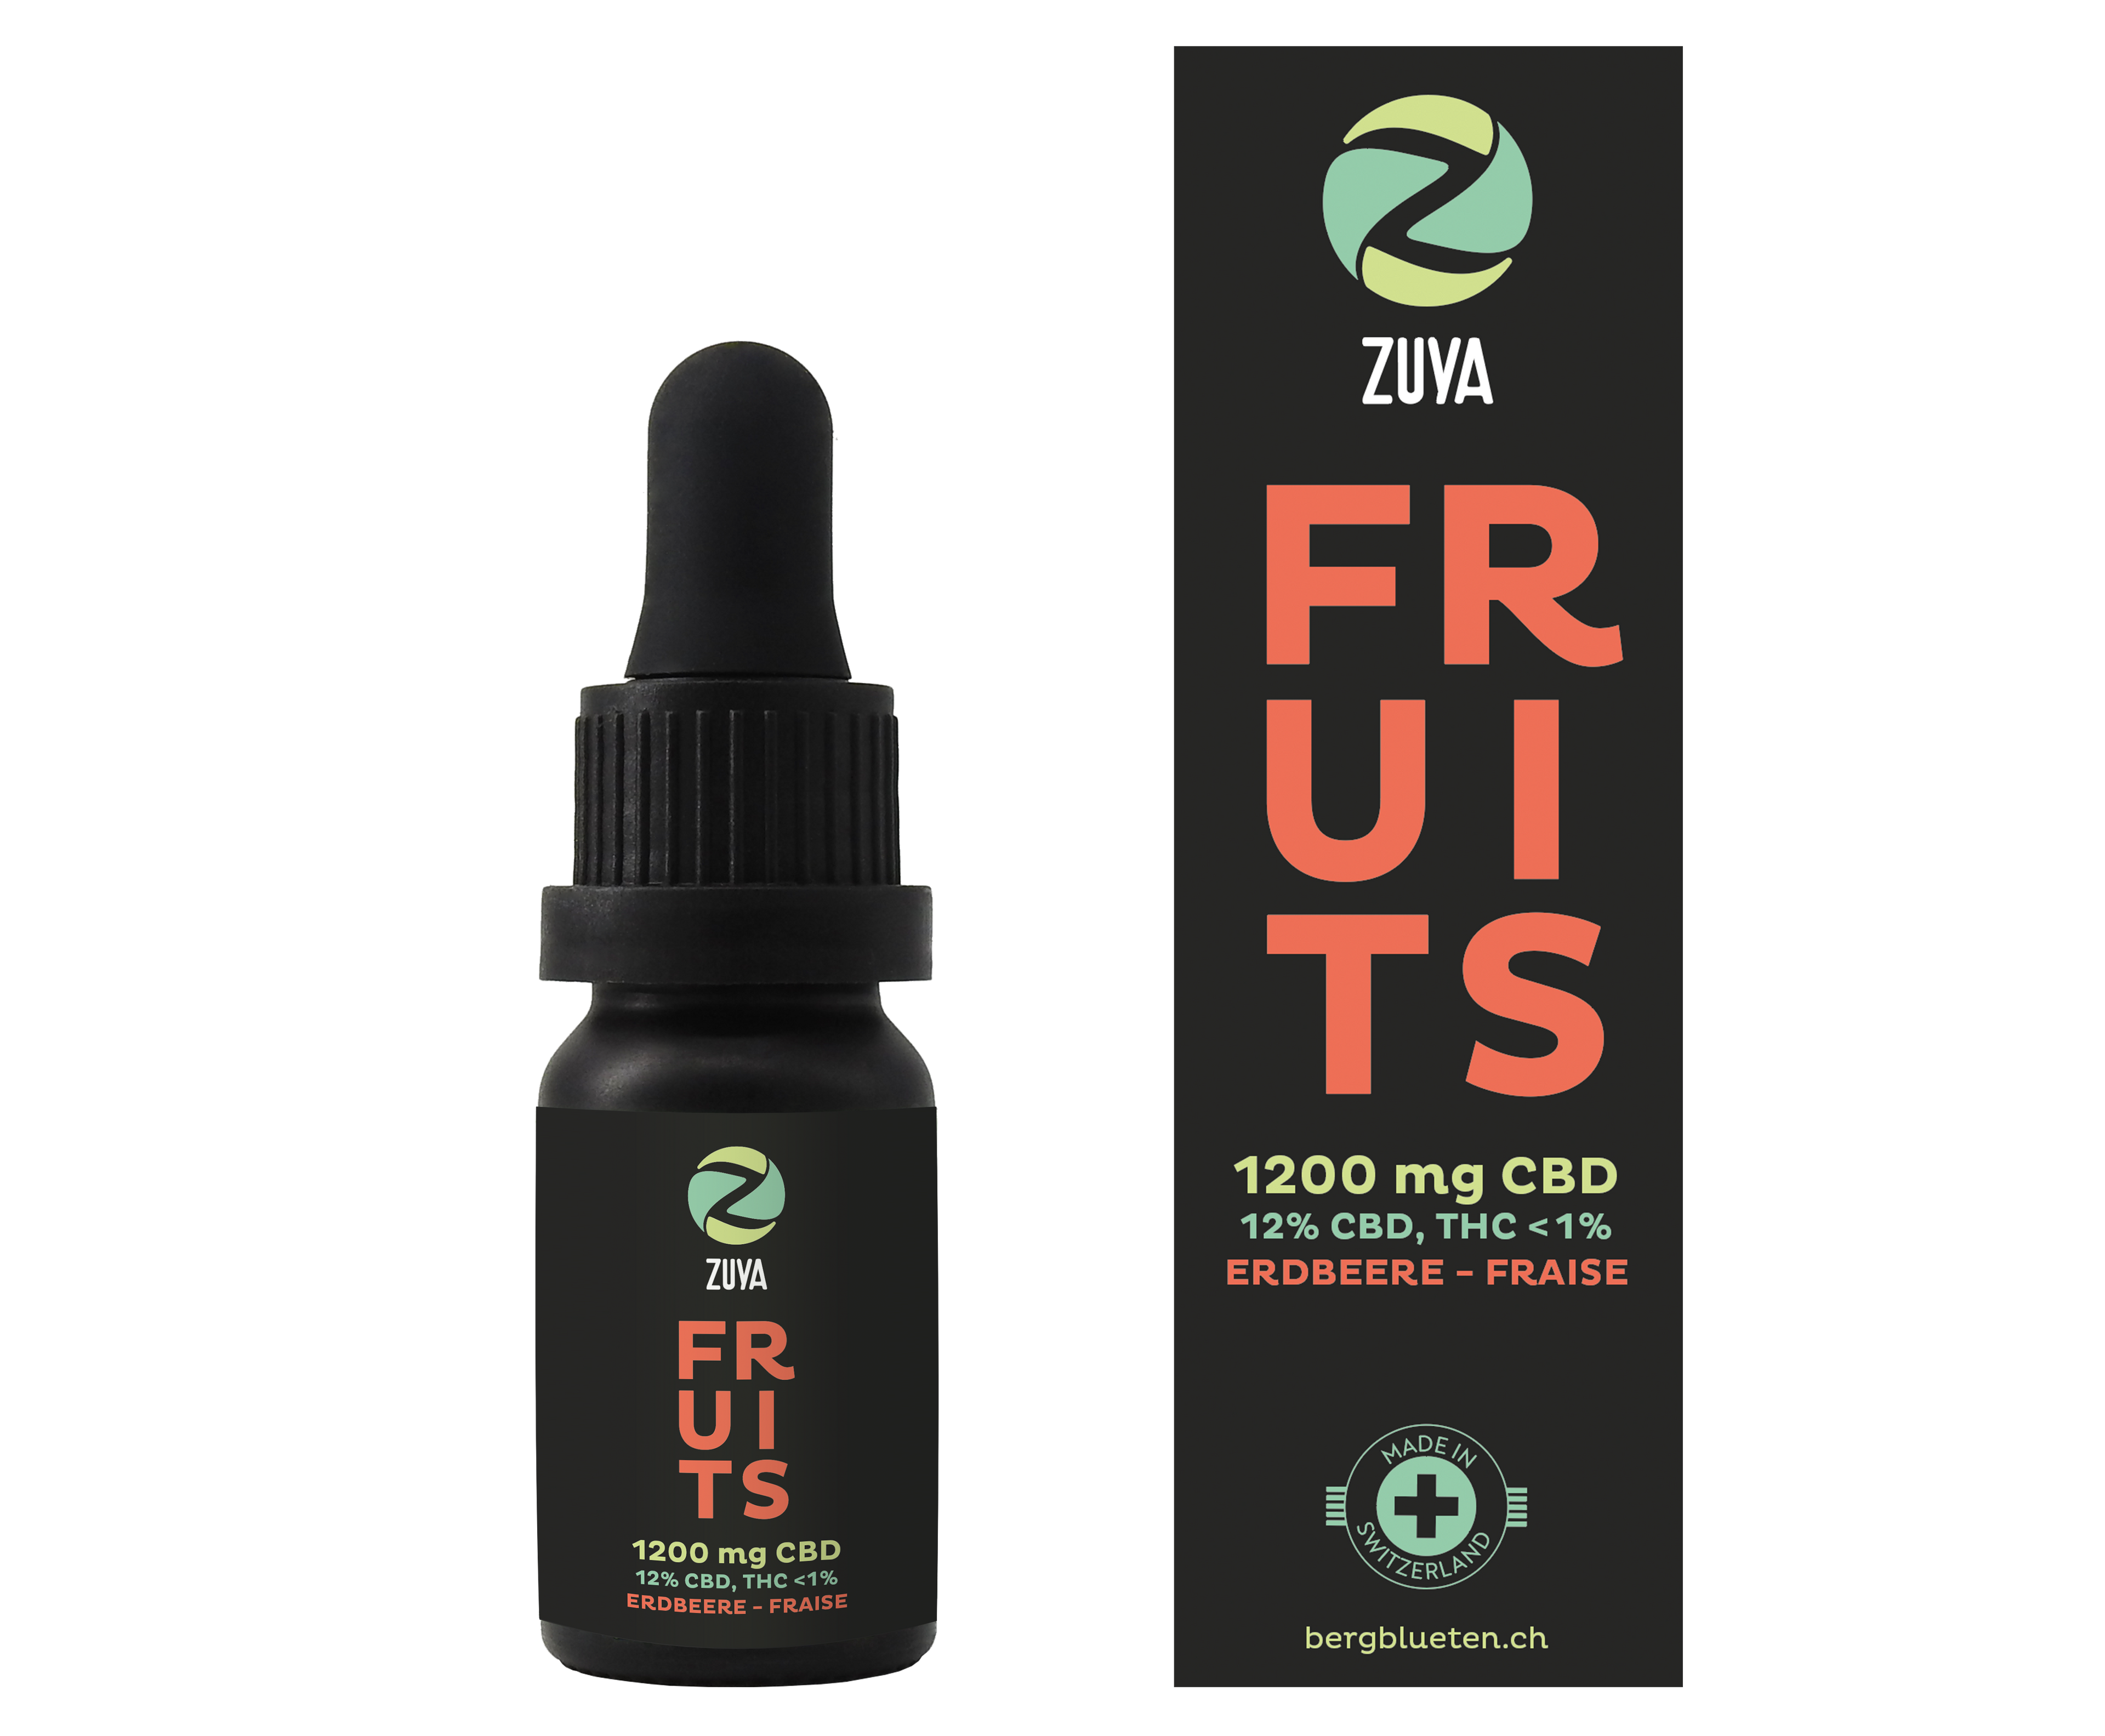 Zuya Fruits 12% CBD fragrance oil